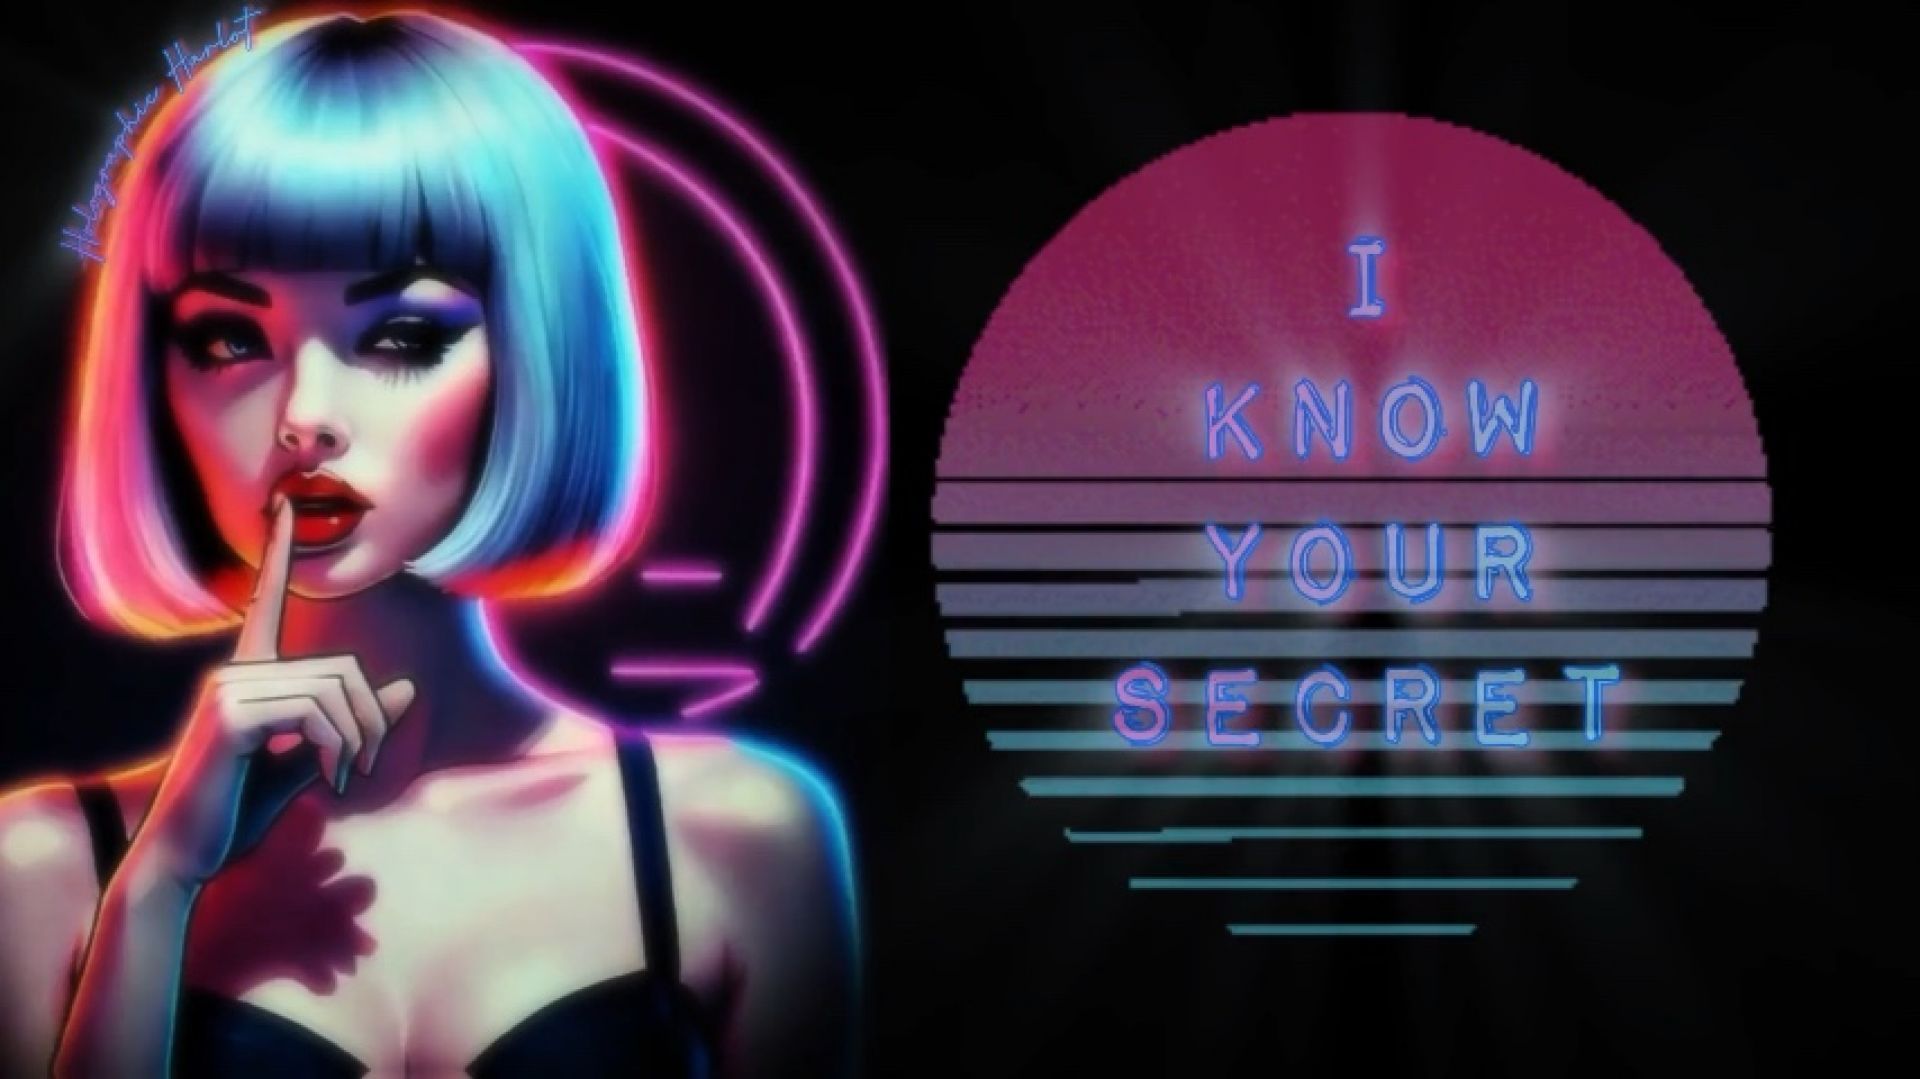 I Know your Secret